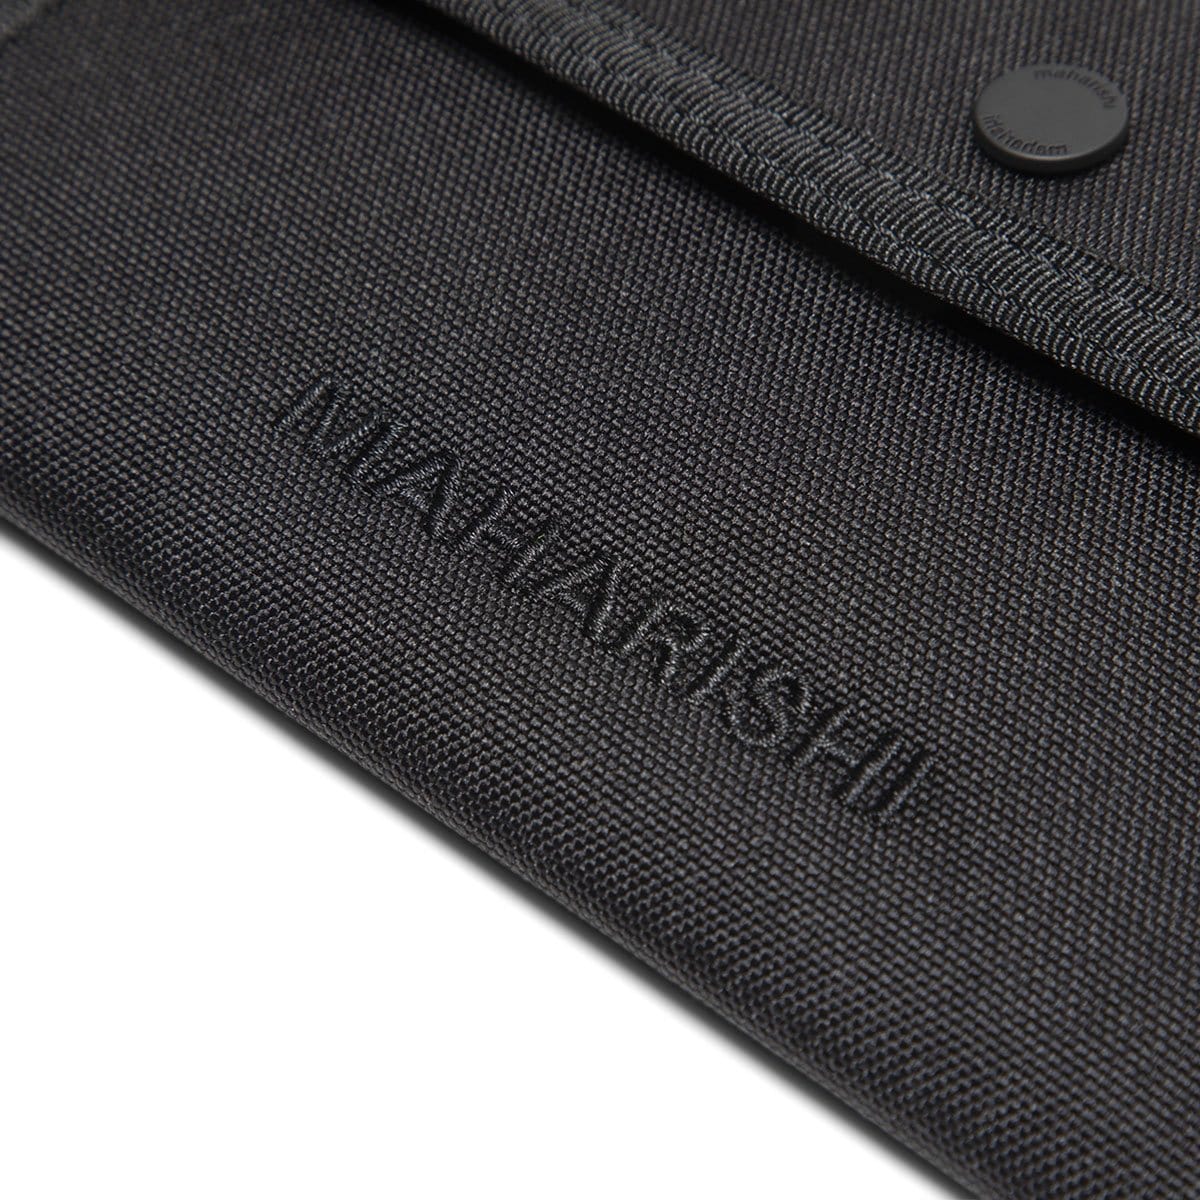 Maharishi Bags & Accessories BLACK / O/S TOBACCO POUCH